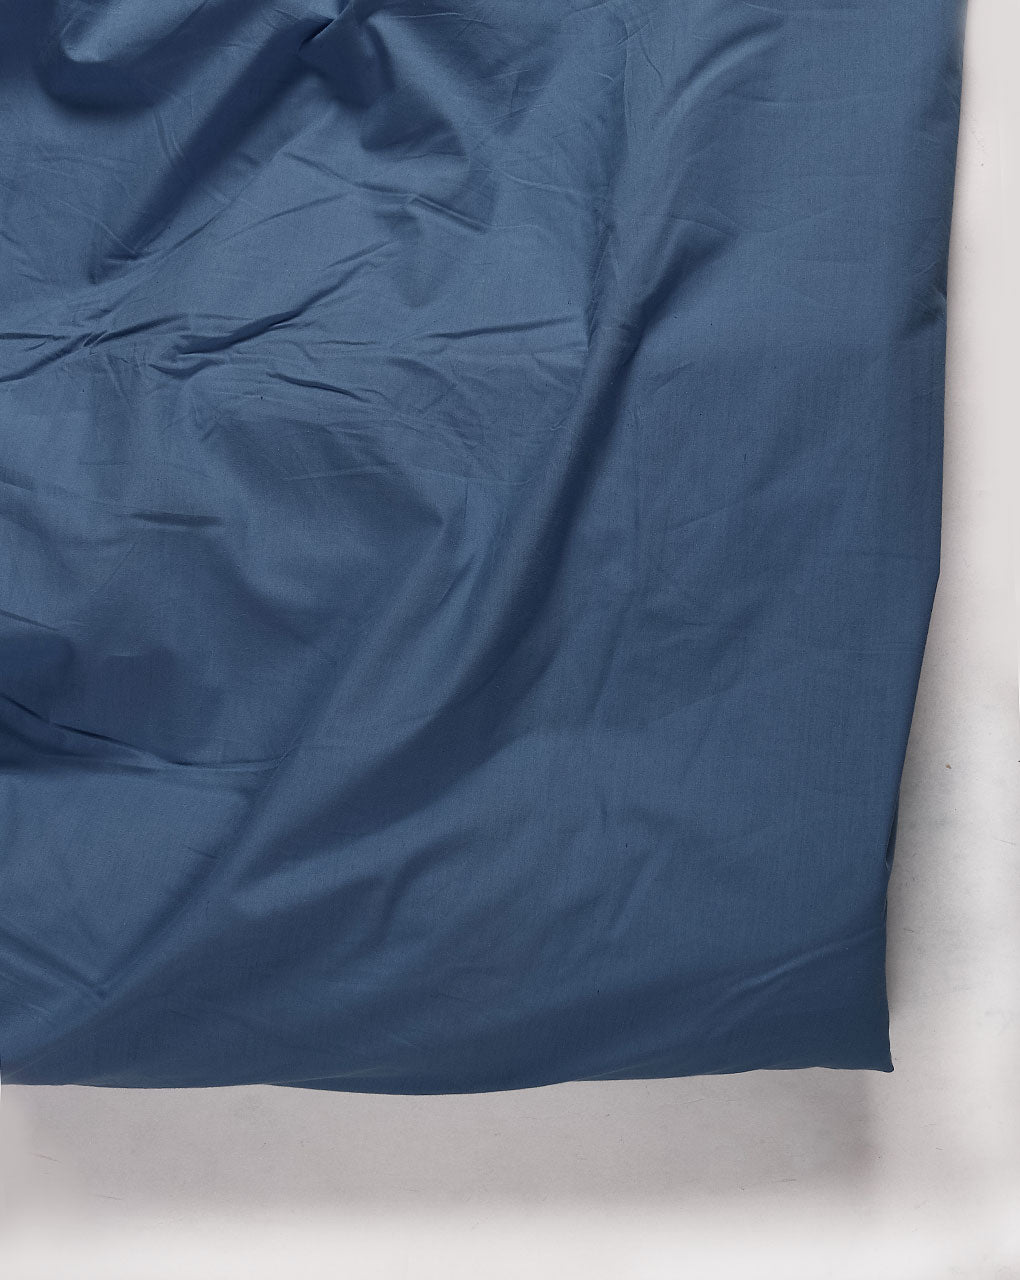 Blue Plain Cotton Poplin Fabric ( Width 58 Inch )